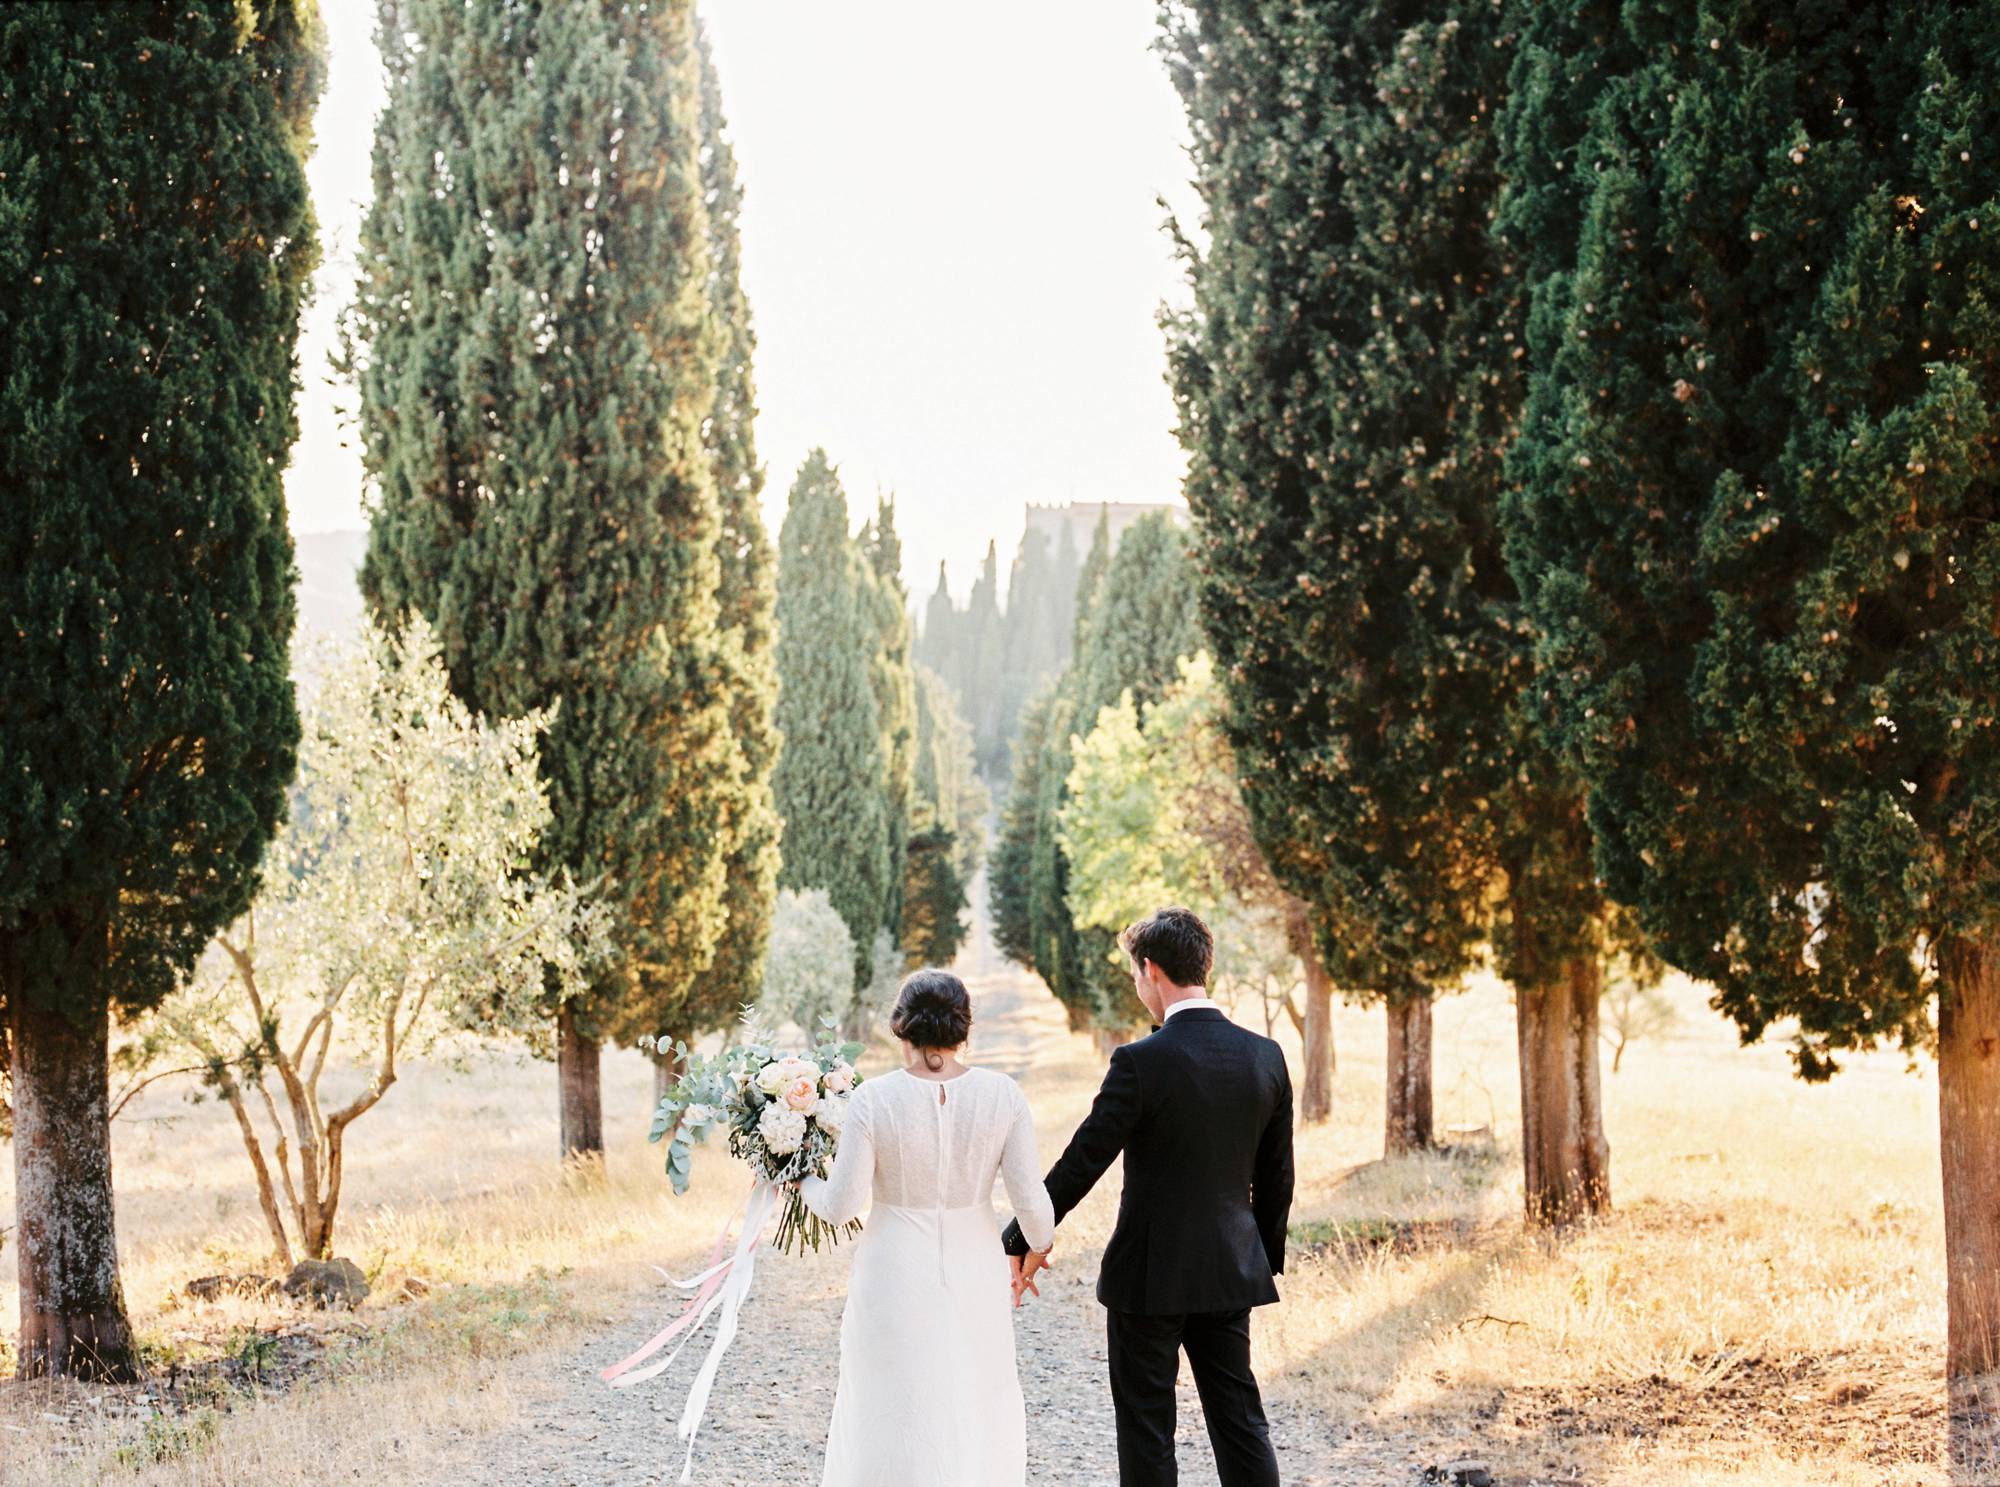 Wedding photographer Destination Wedding Tuscany Italy - Romantic couple shoot